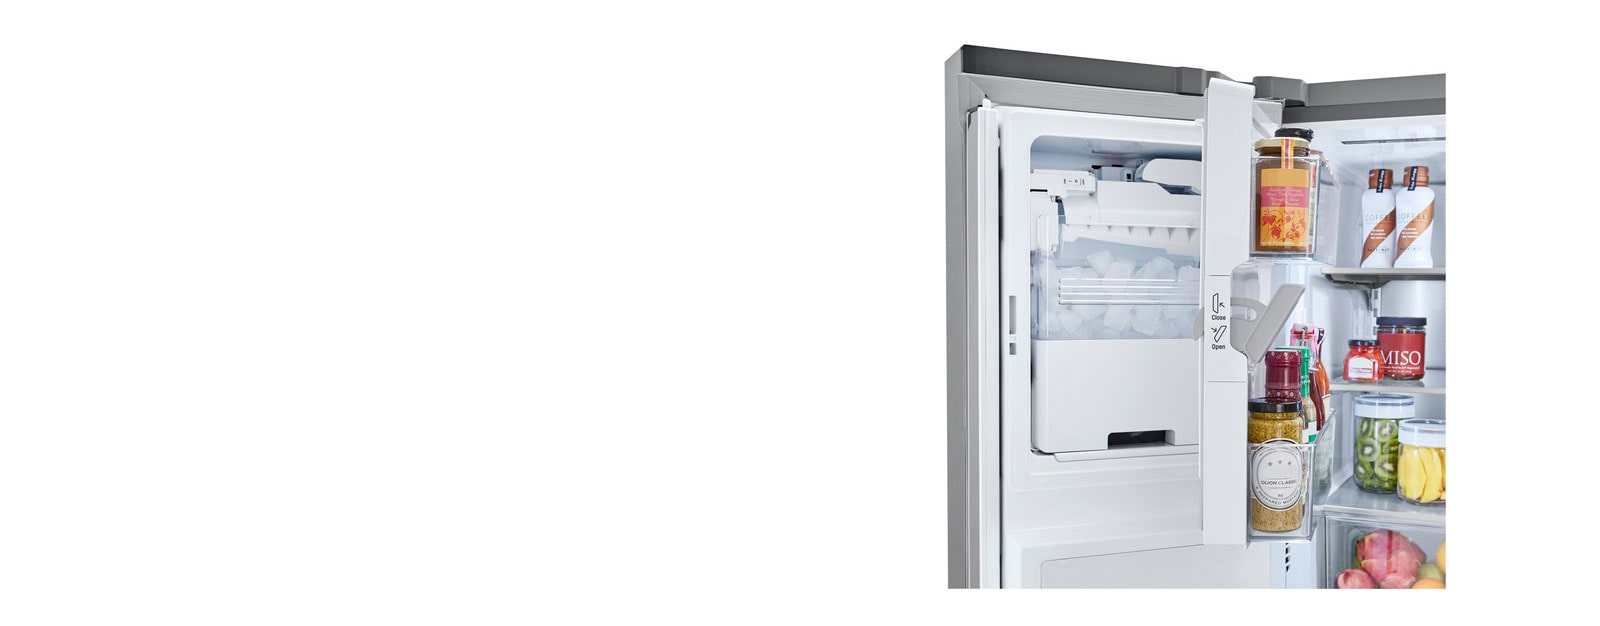 Refrigerator interior showcasing Slim SpacePlus® Ice System